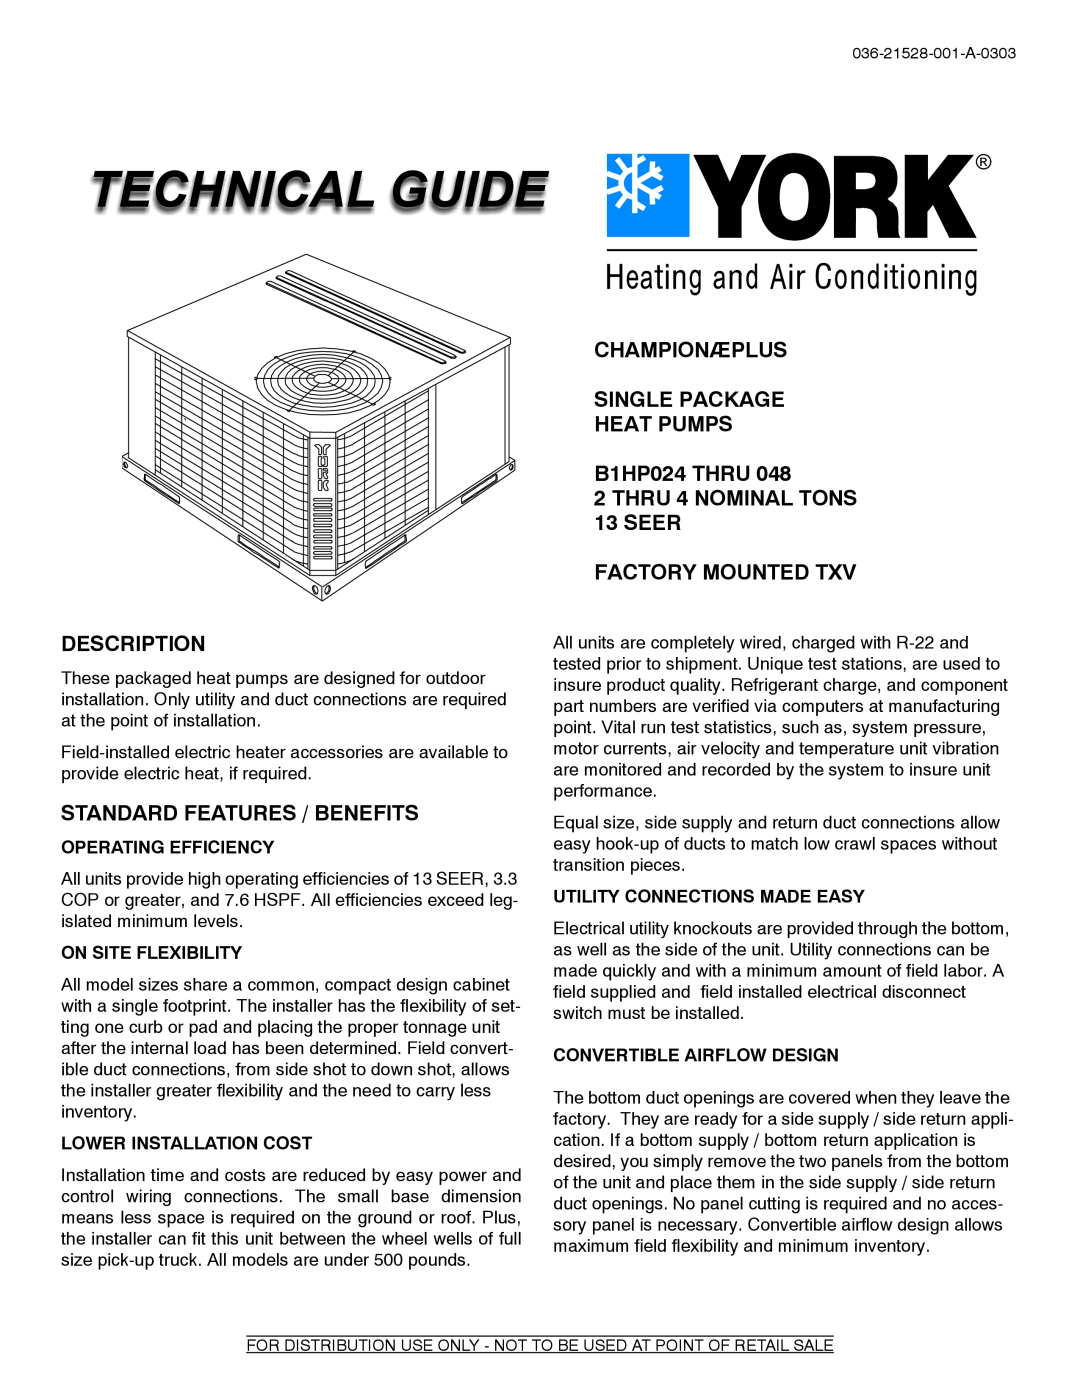 York B1HP024 THRU 048 manual Description, Standard Features / Benefits, Championæplus Single Package Heat Pumps 